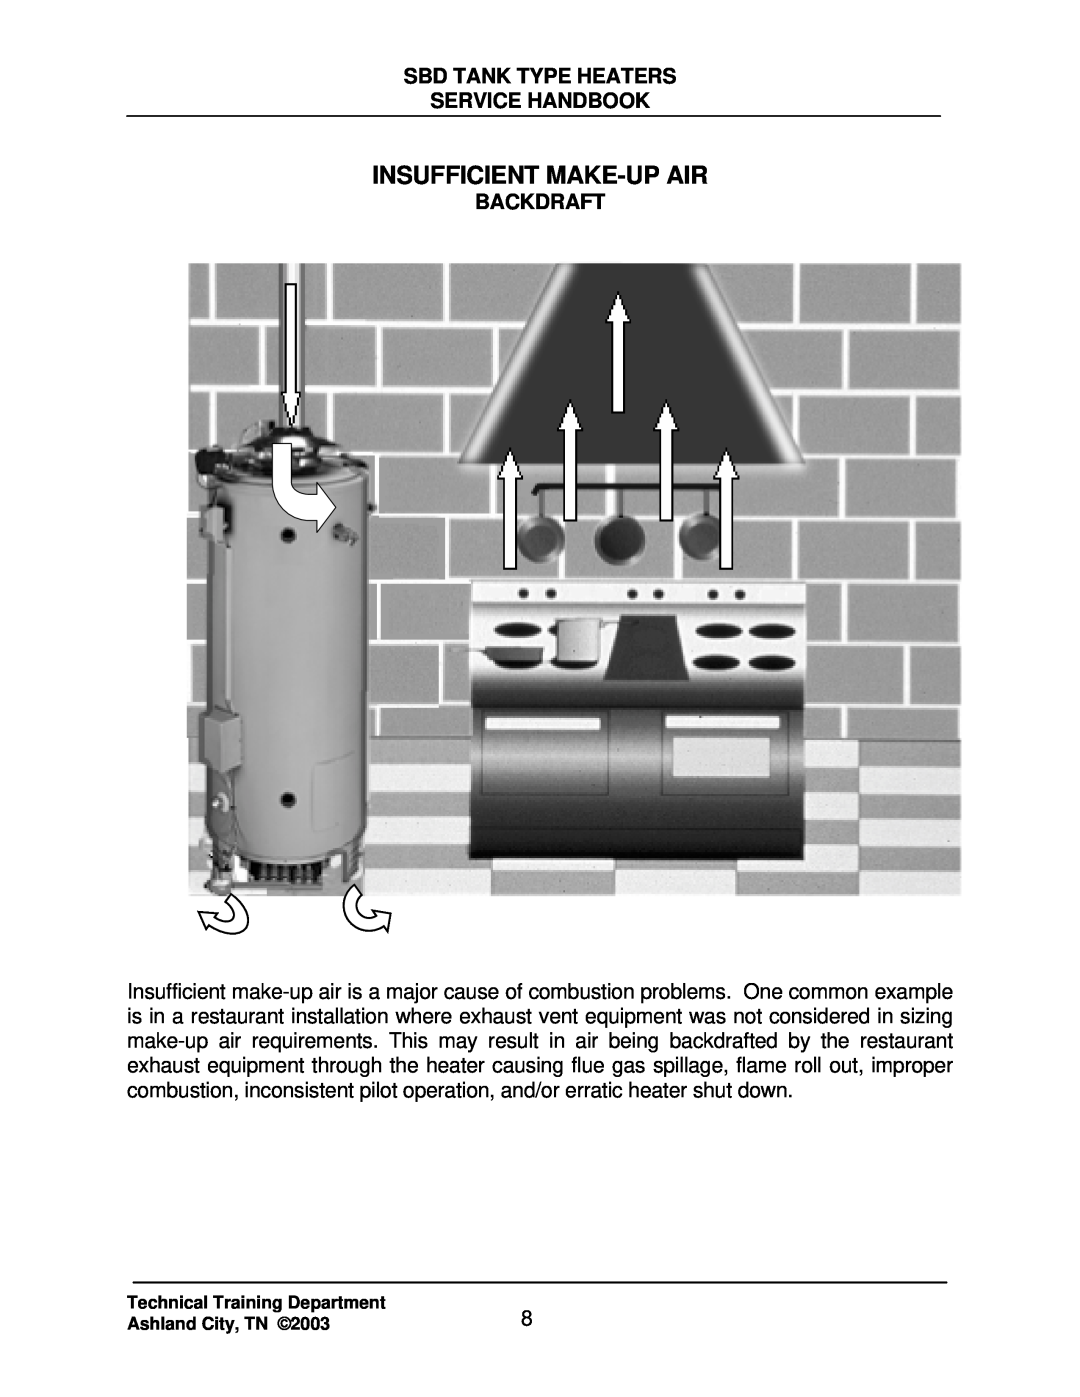 State Industries SBD71 120, SBD85 500 manual Insufficient Make-Upair, Backdraft, Sbd Tank Type Heaters Service Handbook 